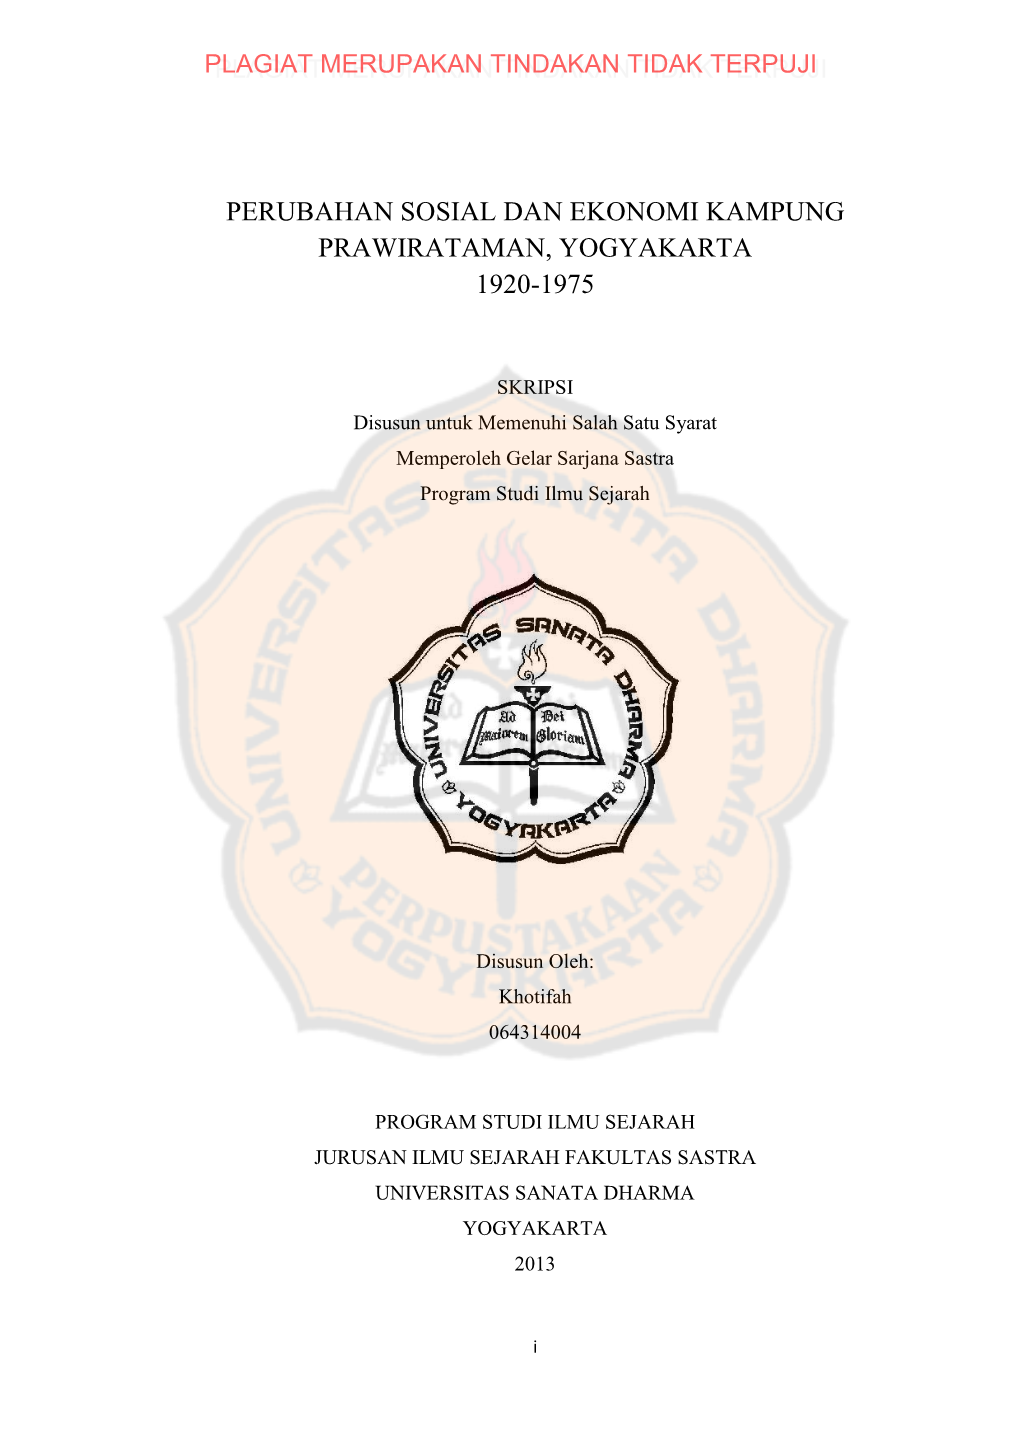 Perubahan Sosial Dan Ekonomi Kampung Prawirataman, Yogyakarta 1920-1975